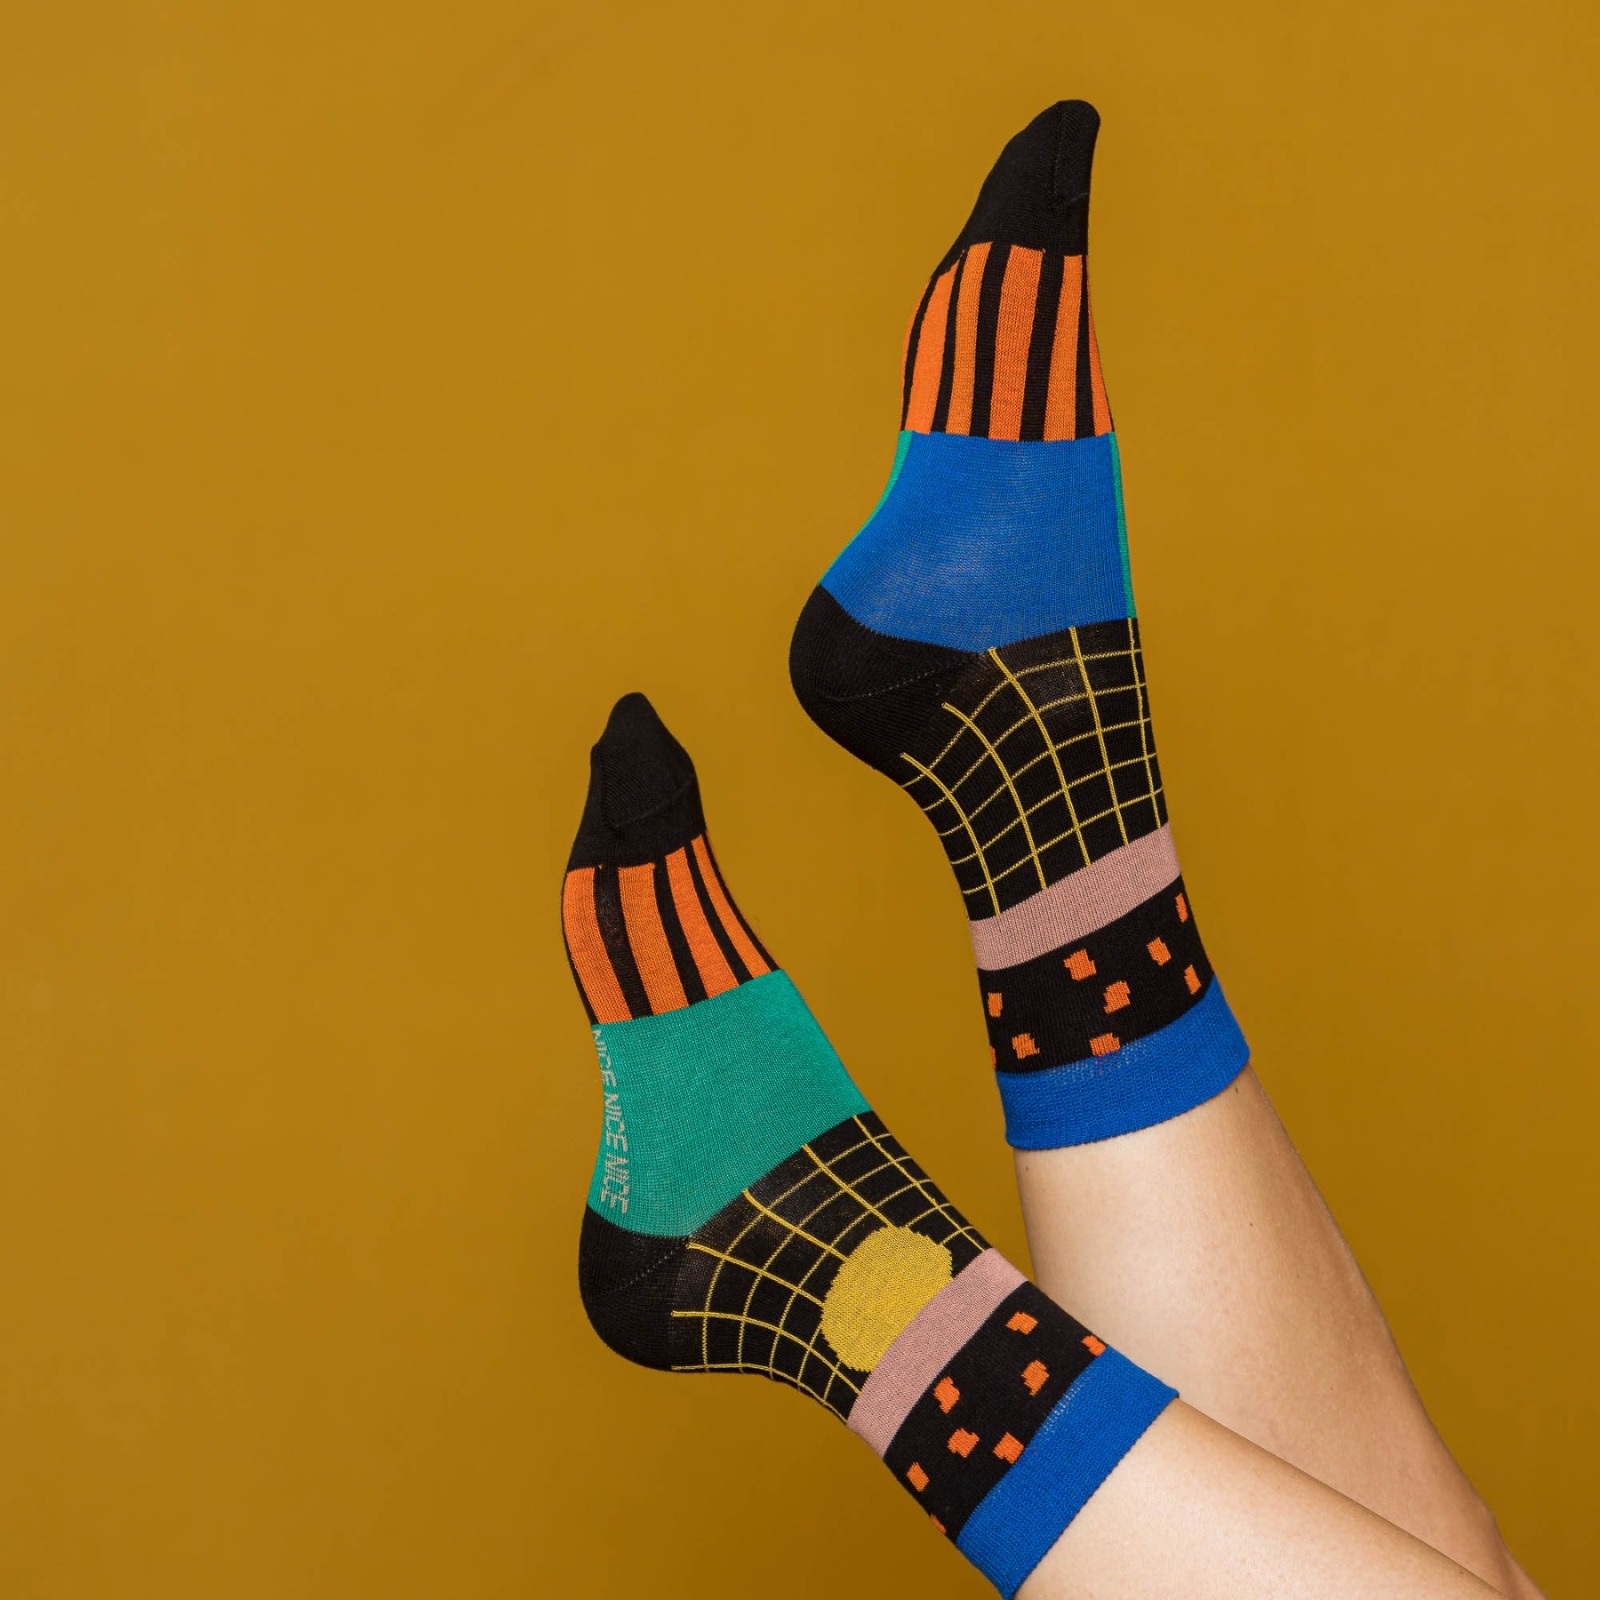 nicenicenice - nice socks pattern black 3